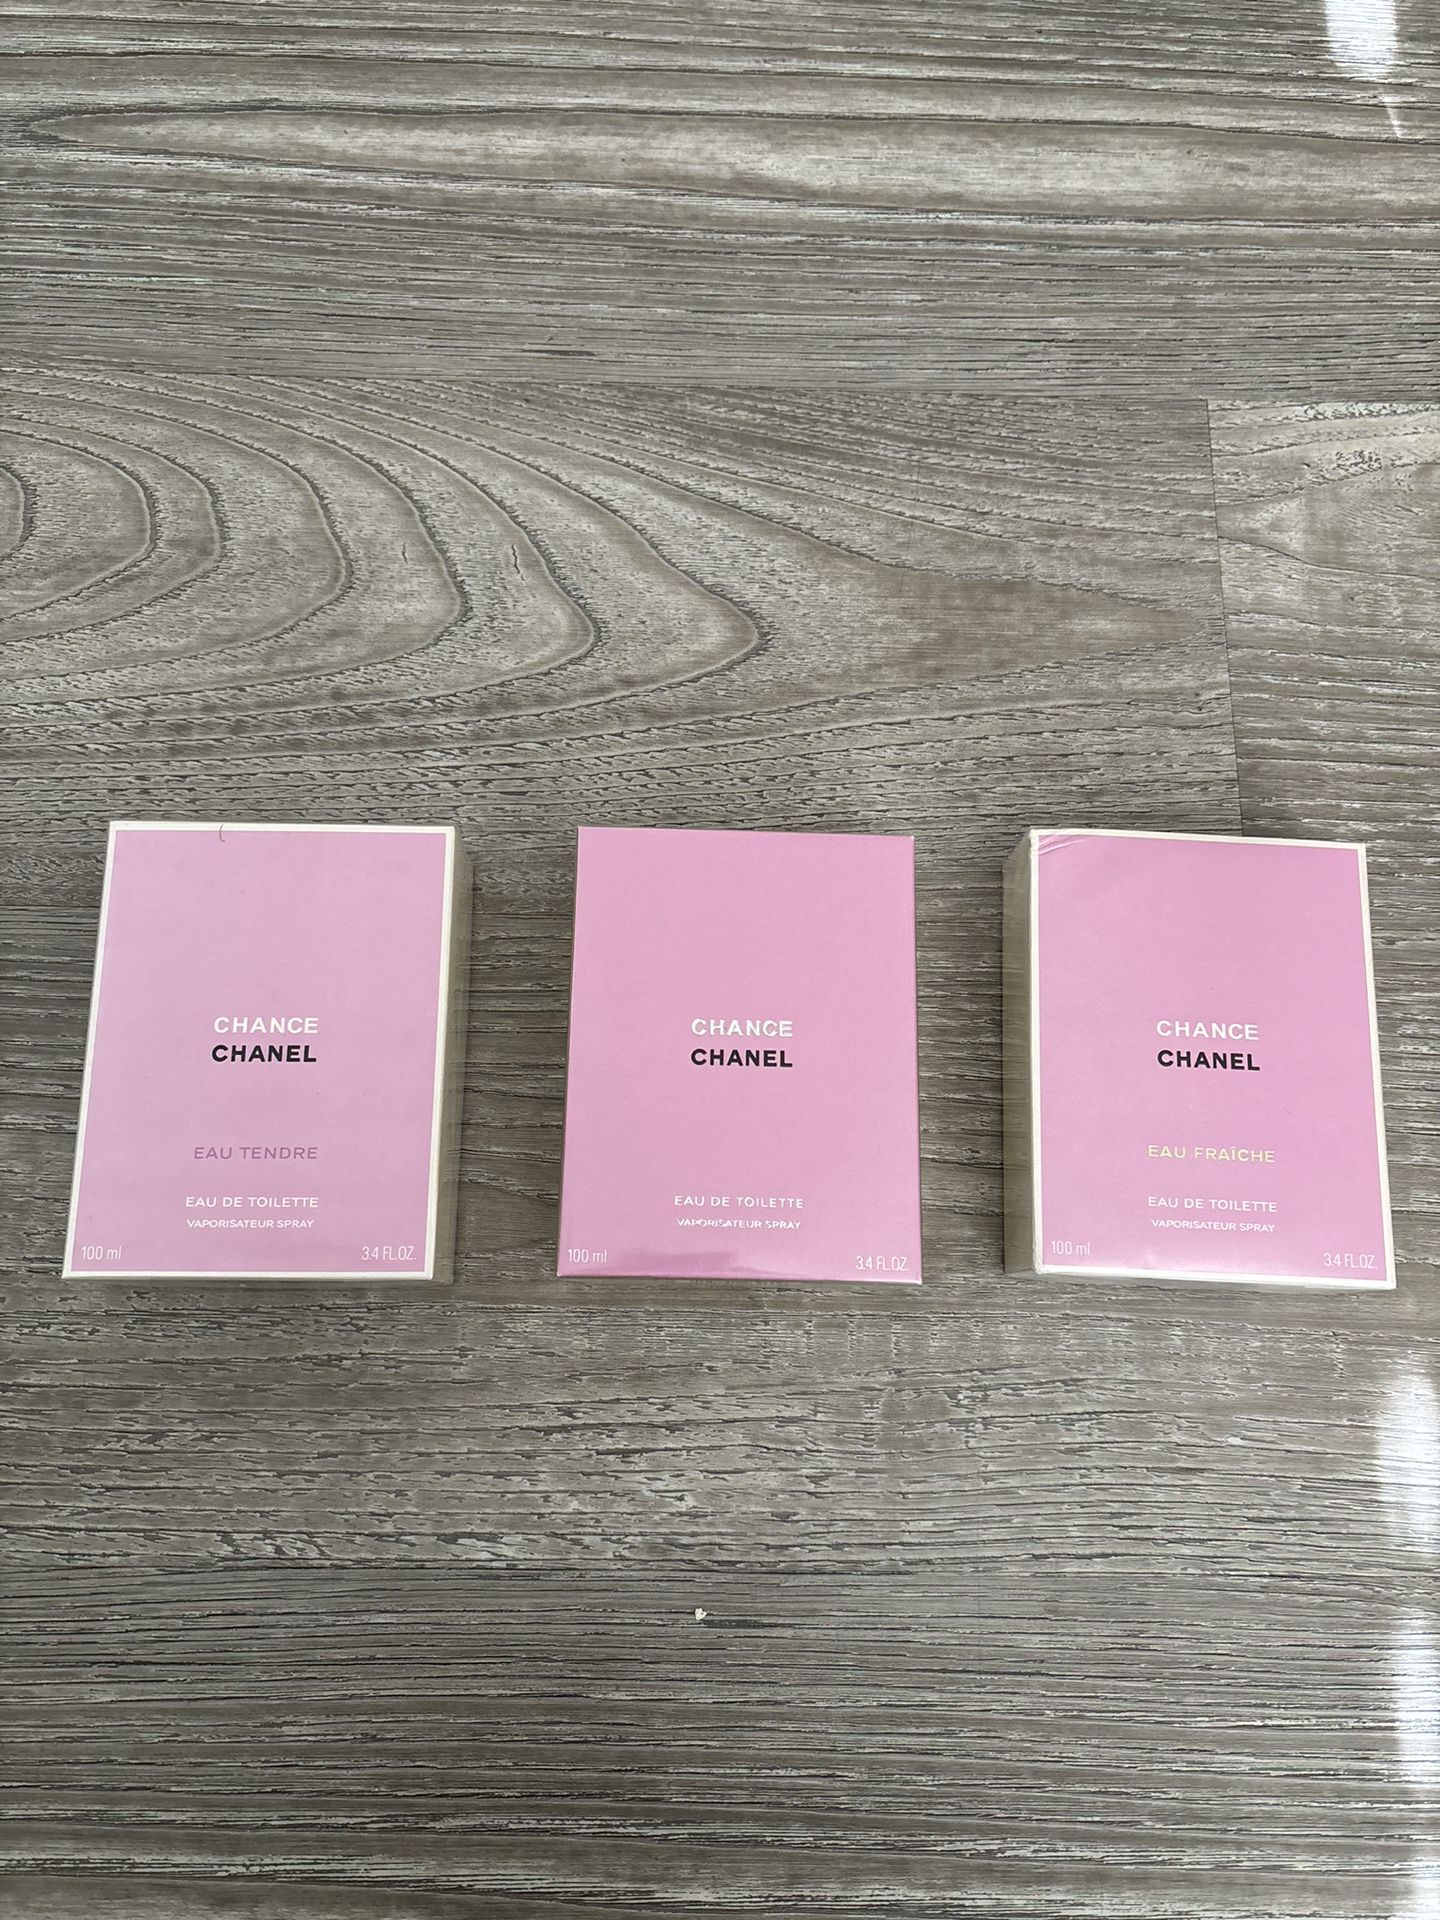 Chanel Women’s Perfume Chance $60 Each 